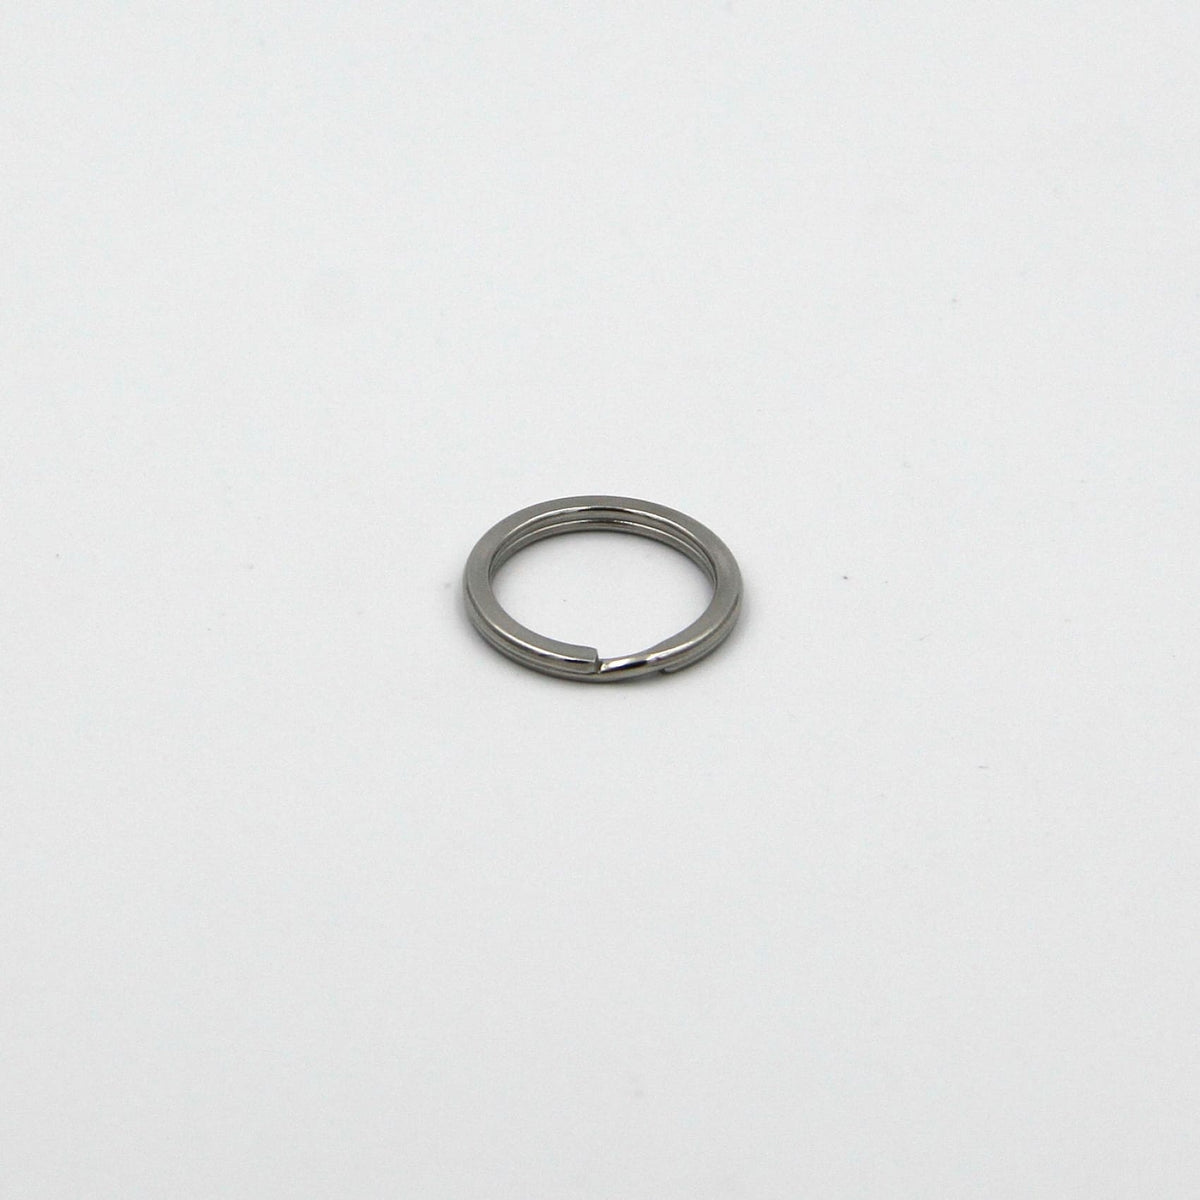 20mm Mini Split Rings Flat Keyrings Black Key Ring O Metal Fob For